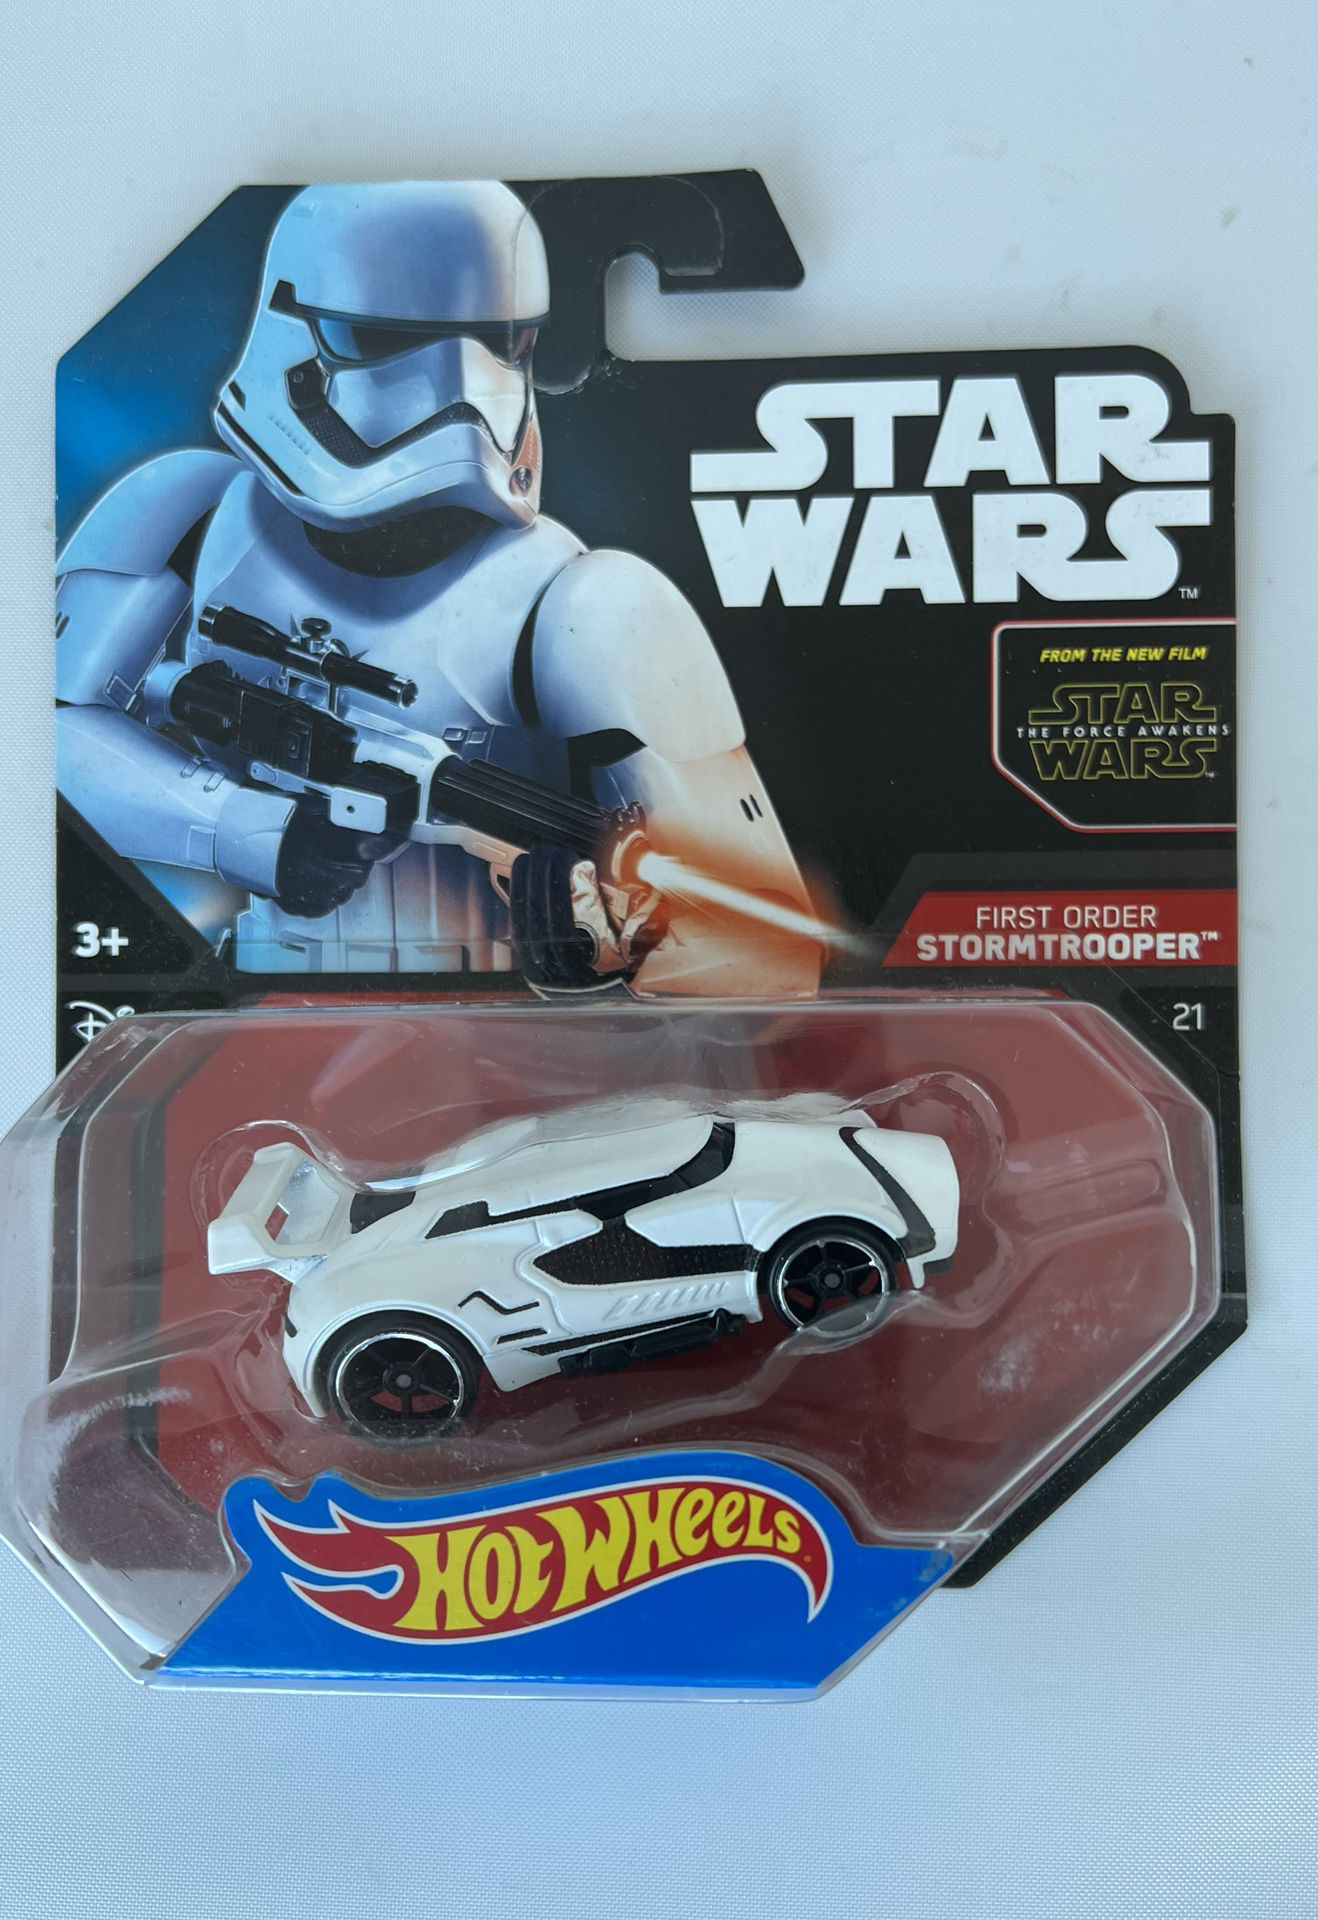 Hot Wheels Star Wars Captain Phasma & First Order Stormtrooper 2